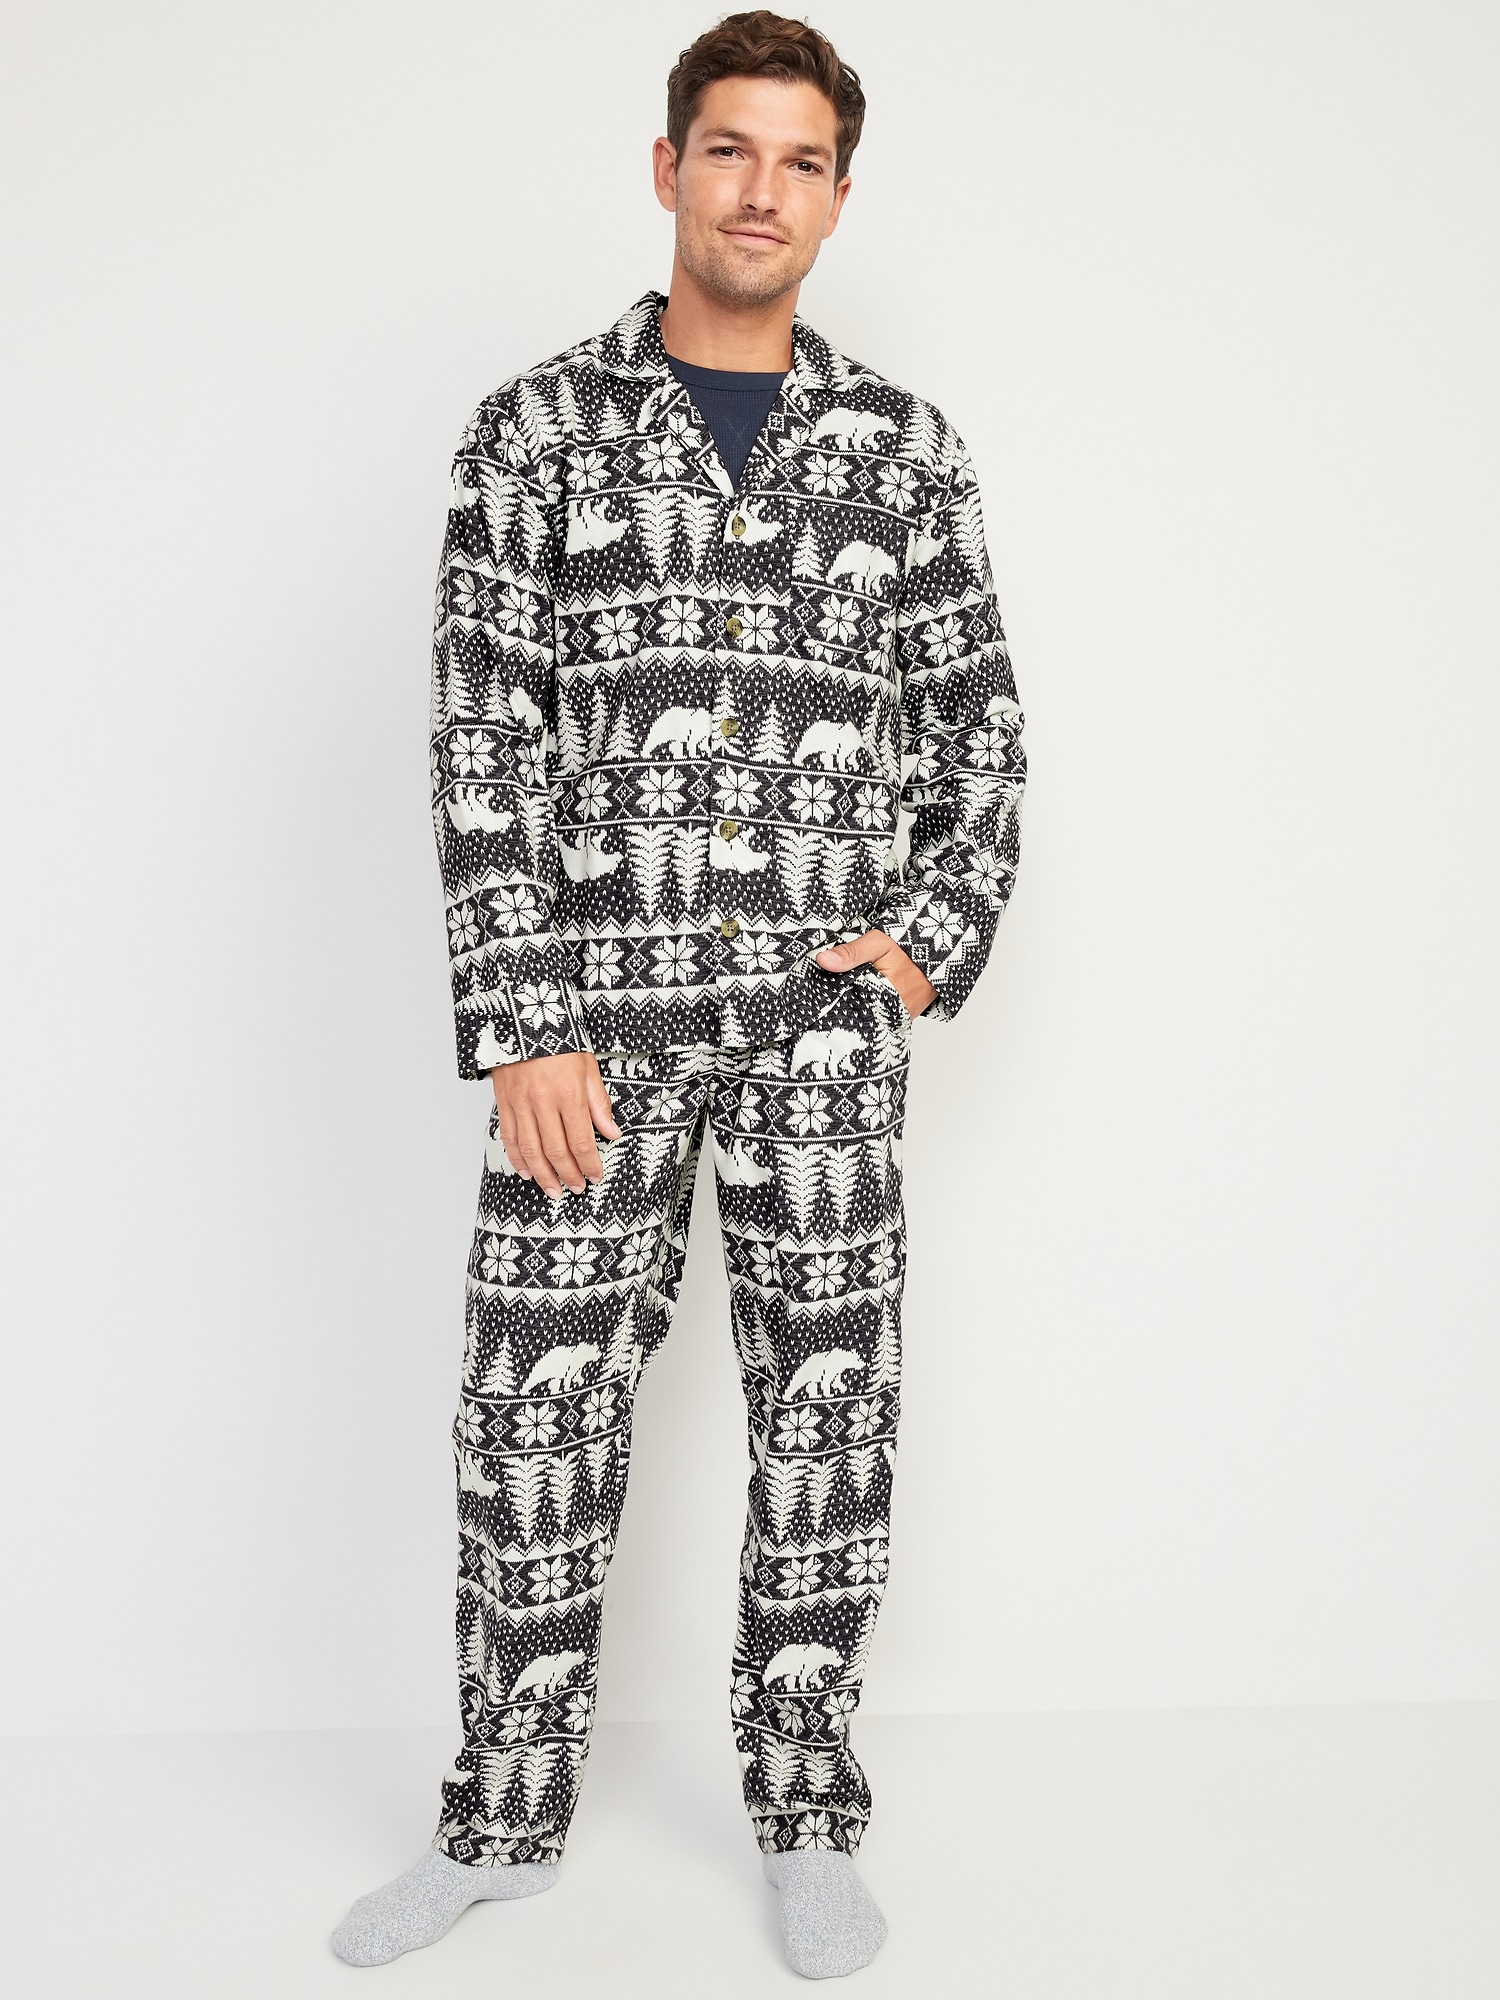 Matching Holiday Print Flannel Pajamas Set | Old Navy